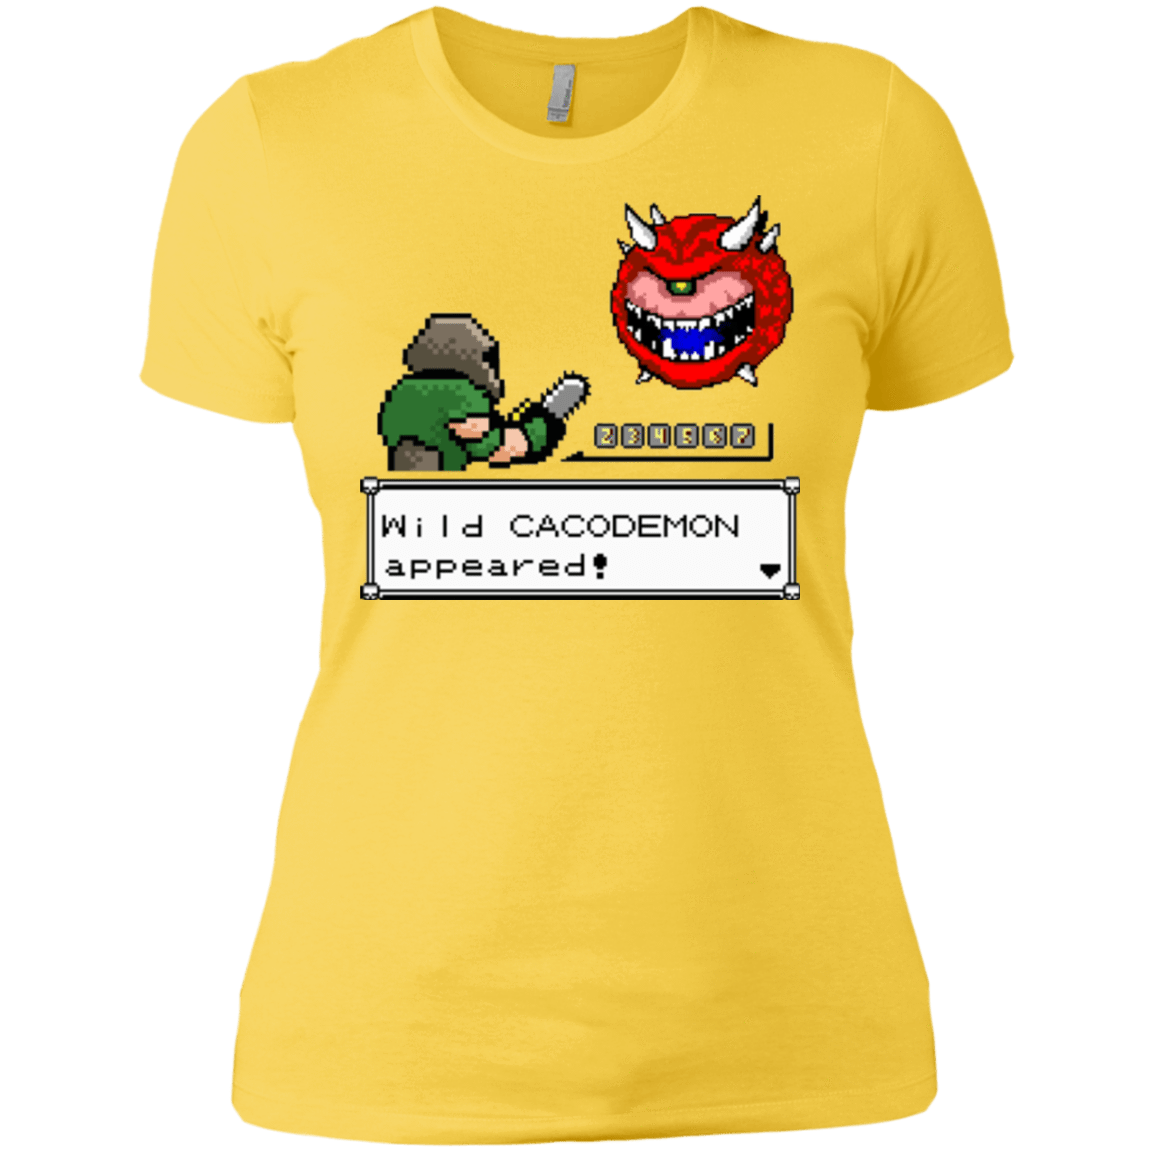 T-Shirts Vibrant Yellow / X-Small A Wild Cacodemon Women's Premium T-Shirt